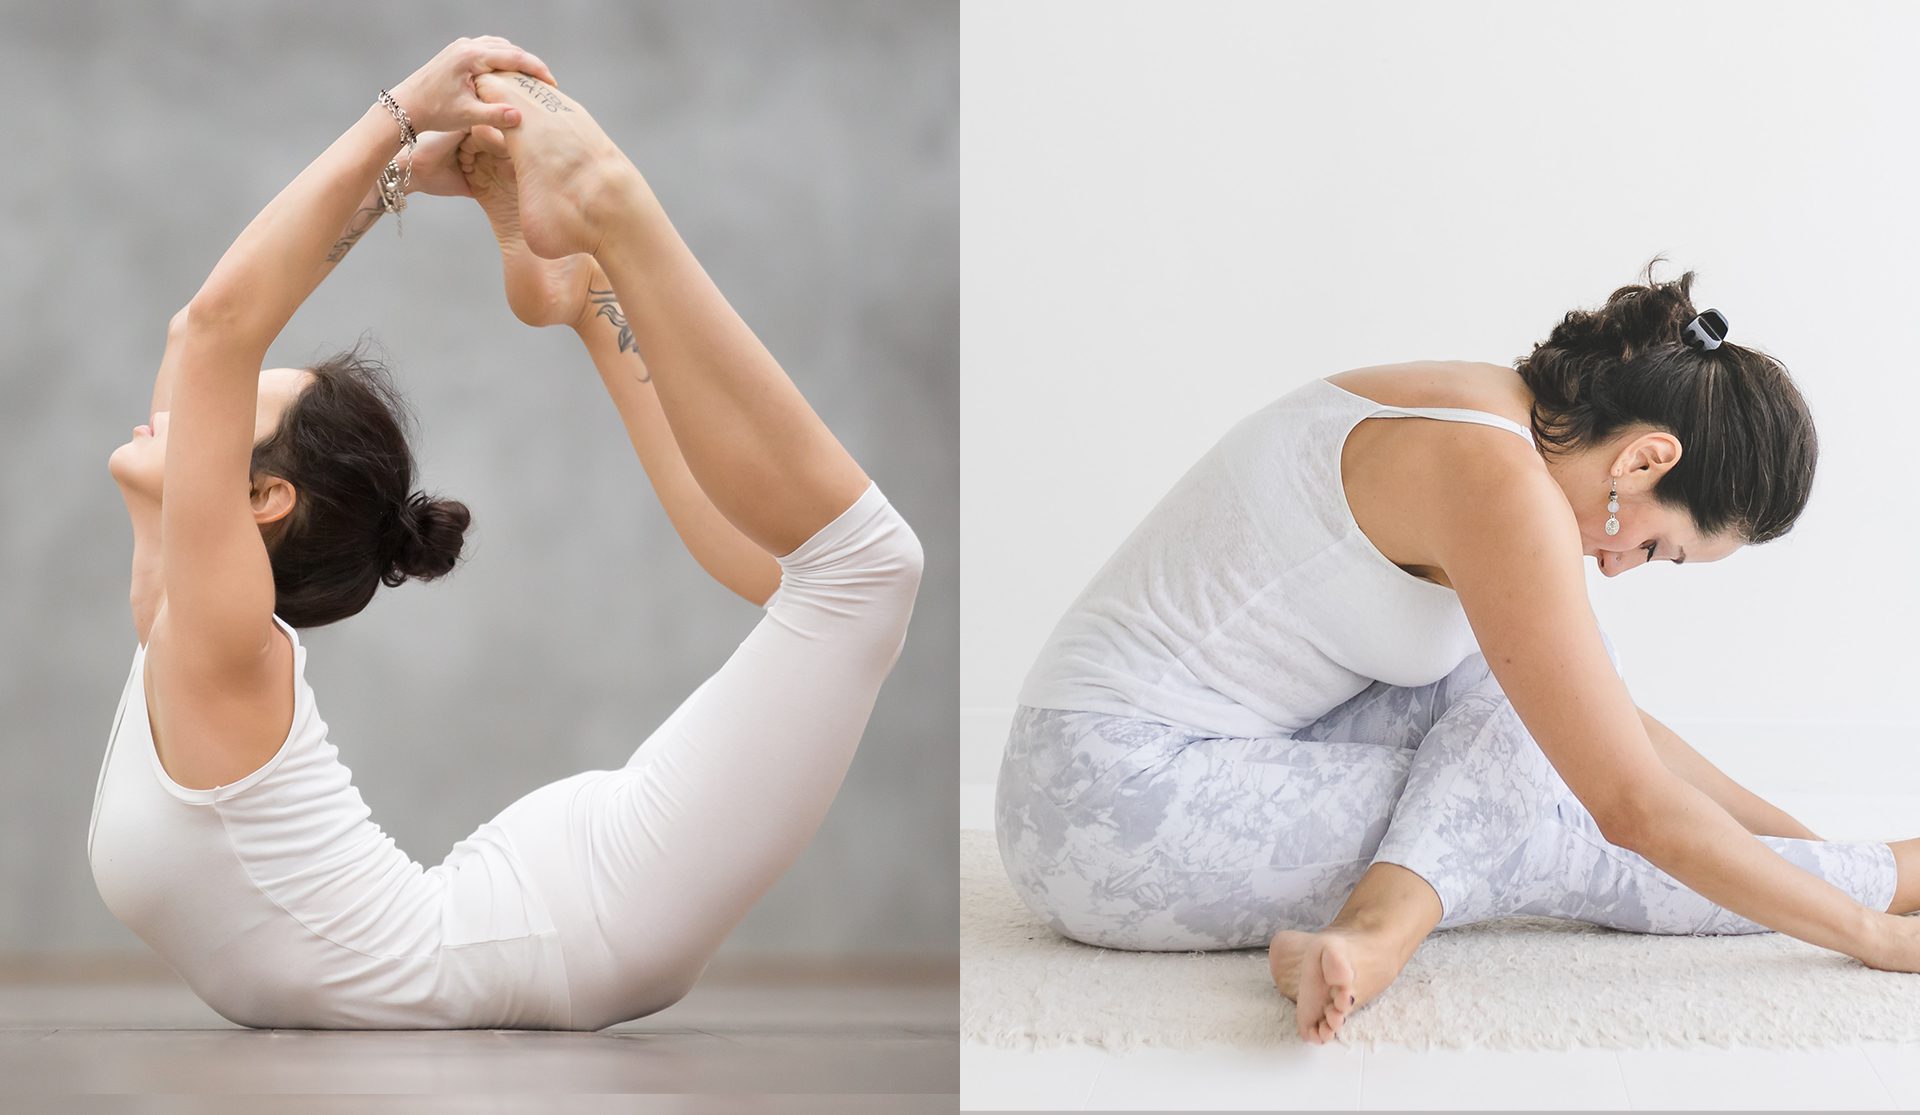 200-hour Yoga Teacher Training Program - Power Vinyasa Yoga Training